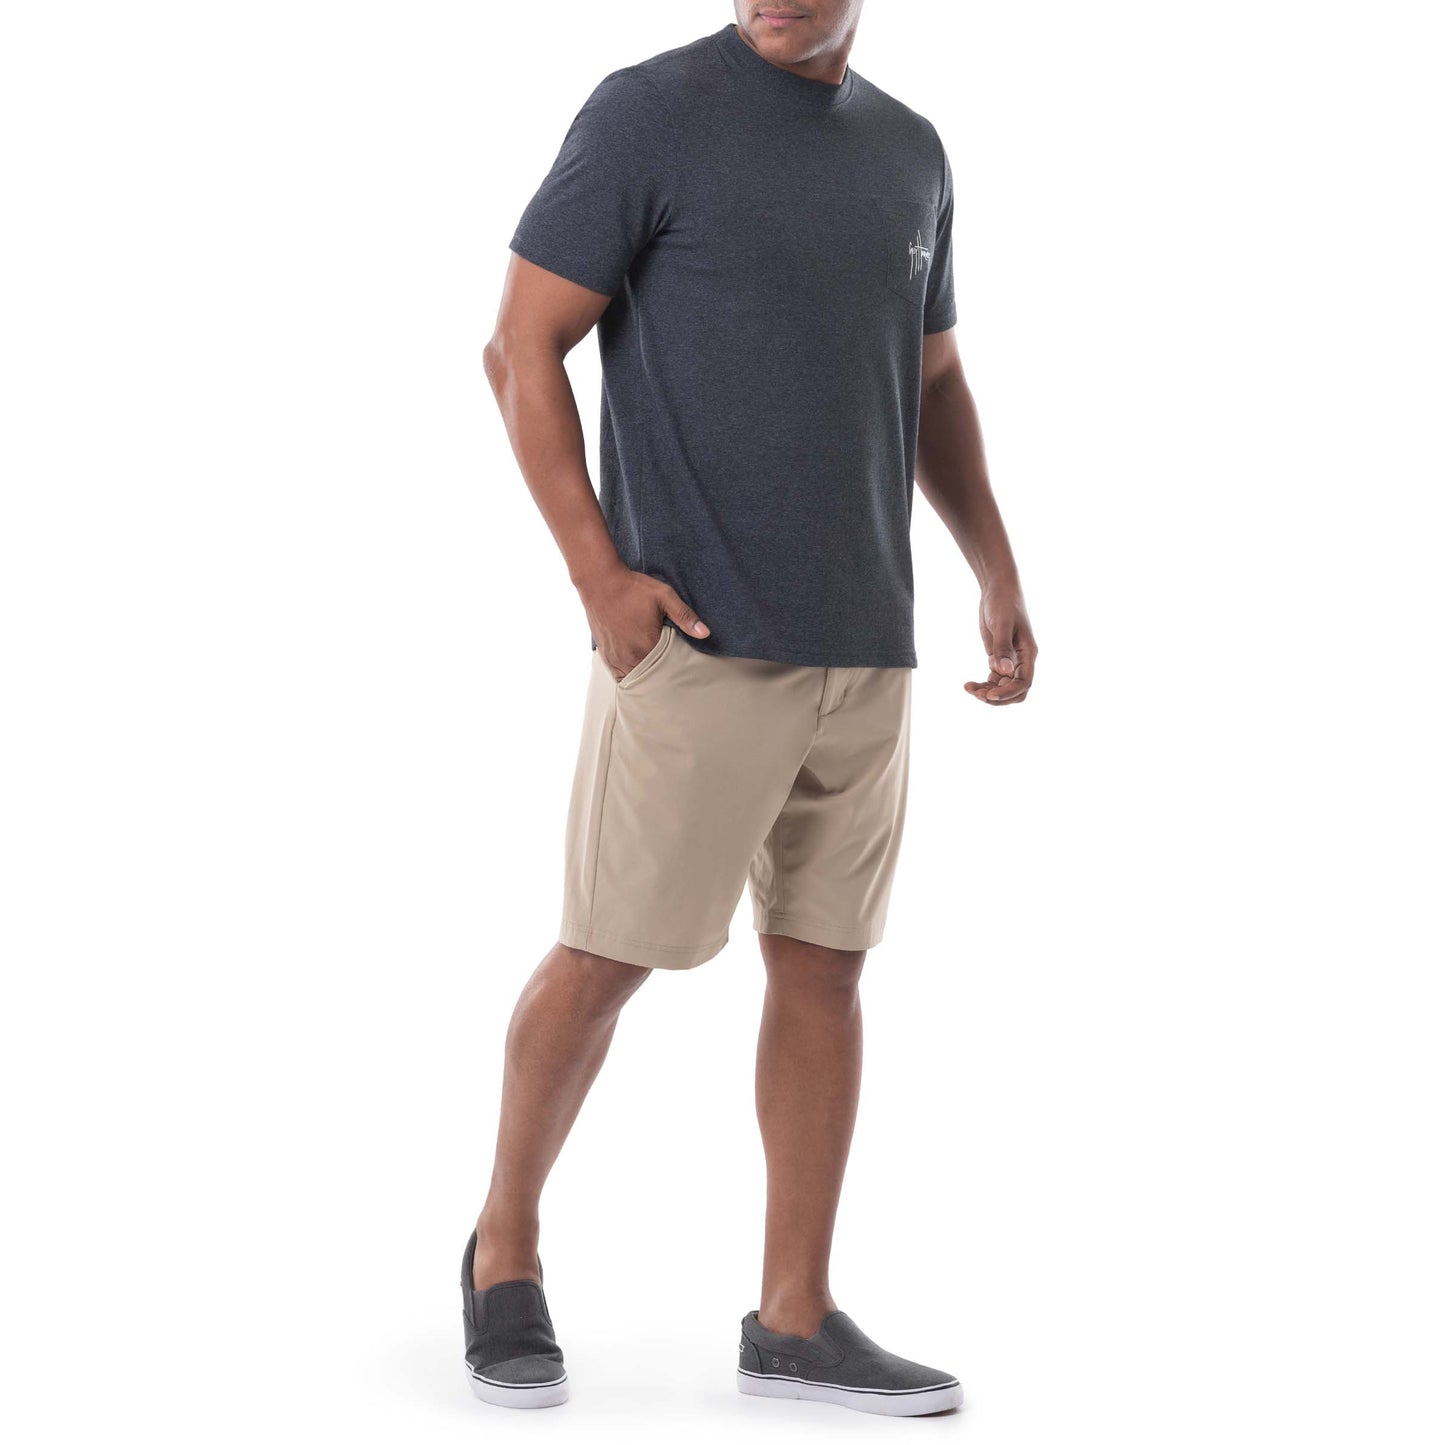 Men's Mahi Threadcycled Short Sleeve Pocket T-Shirt